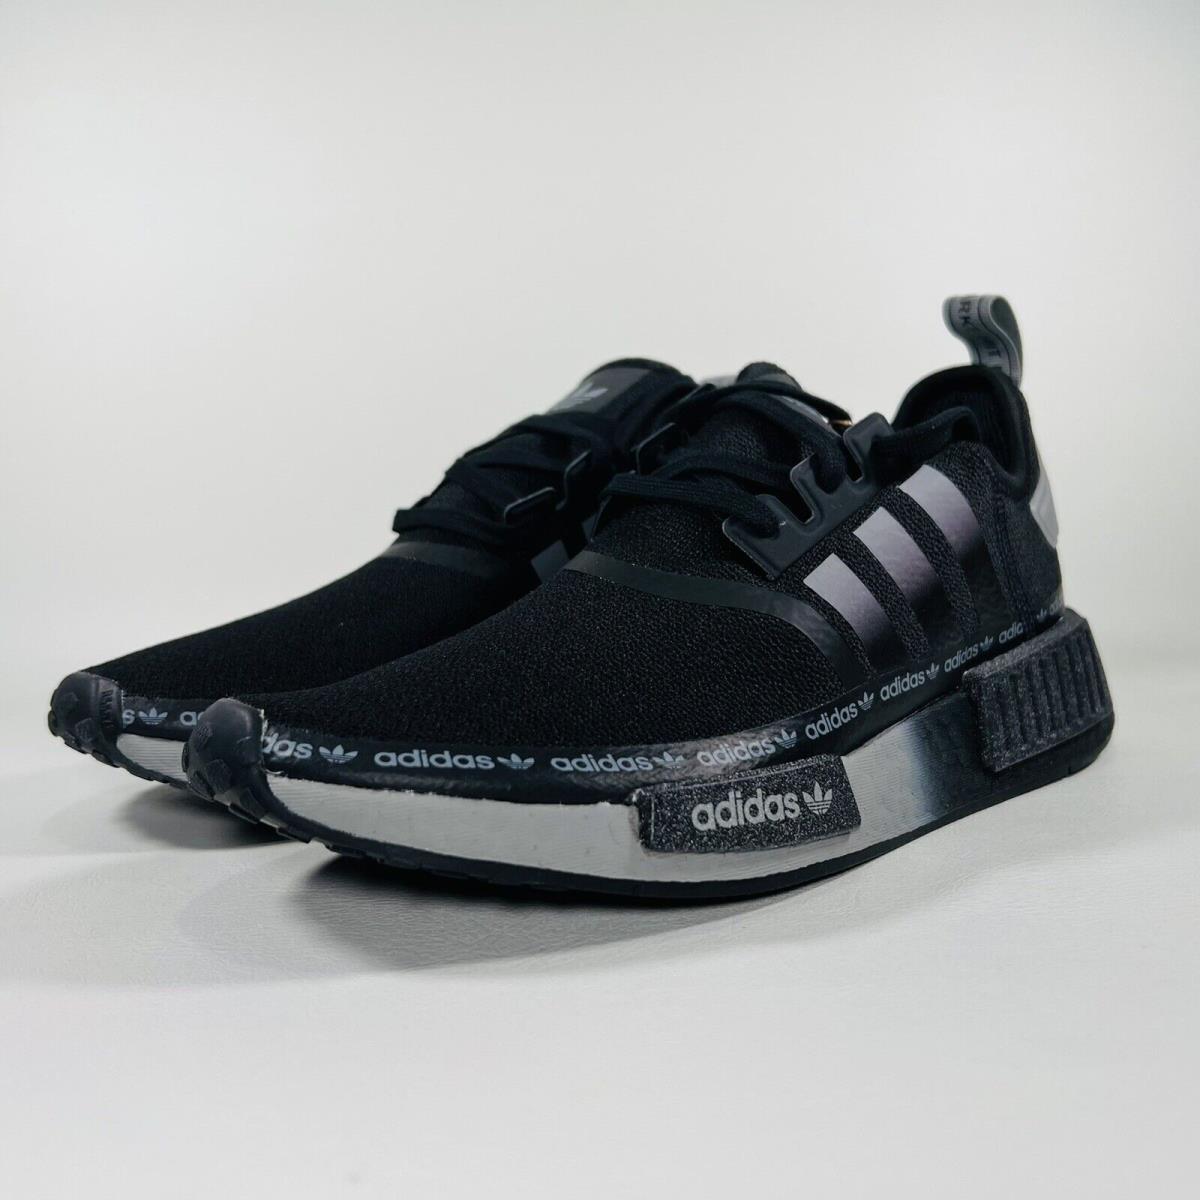 Adidas shoes NMD - Black 13